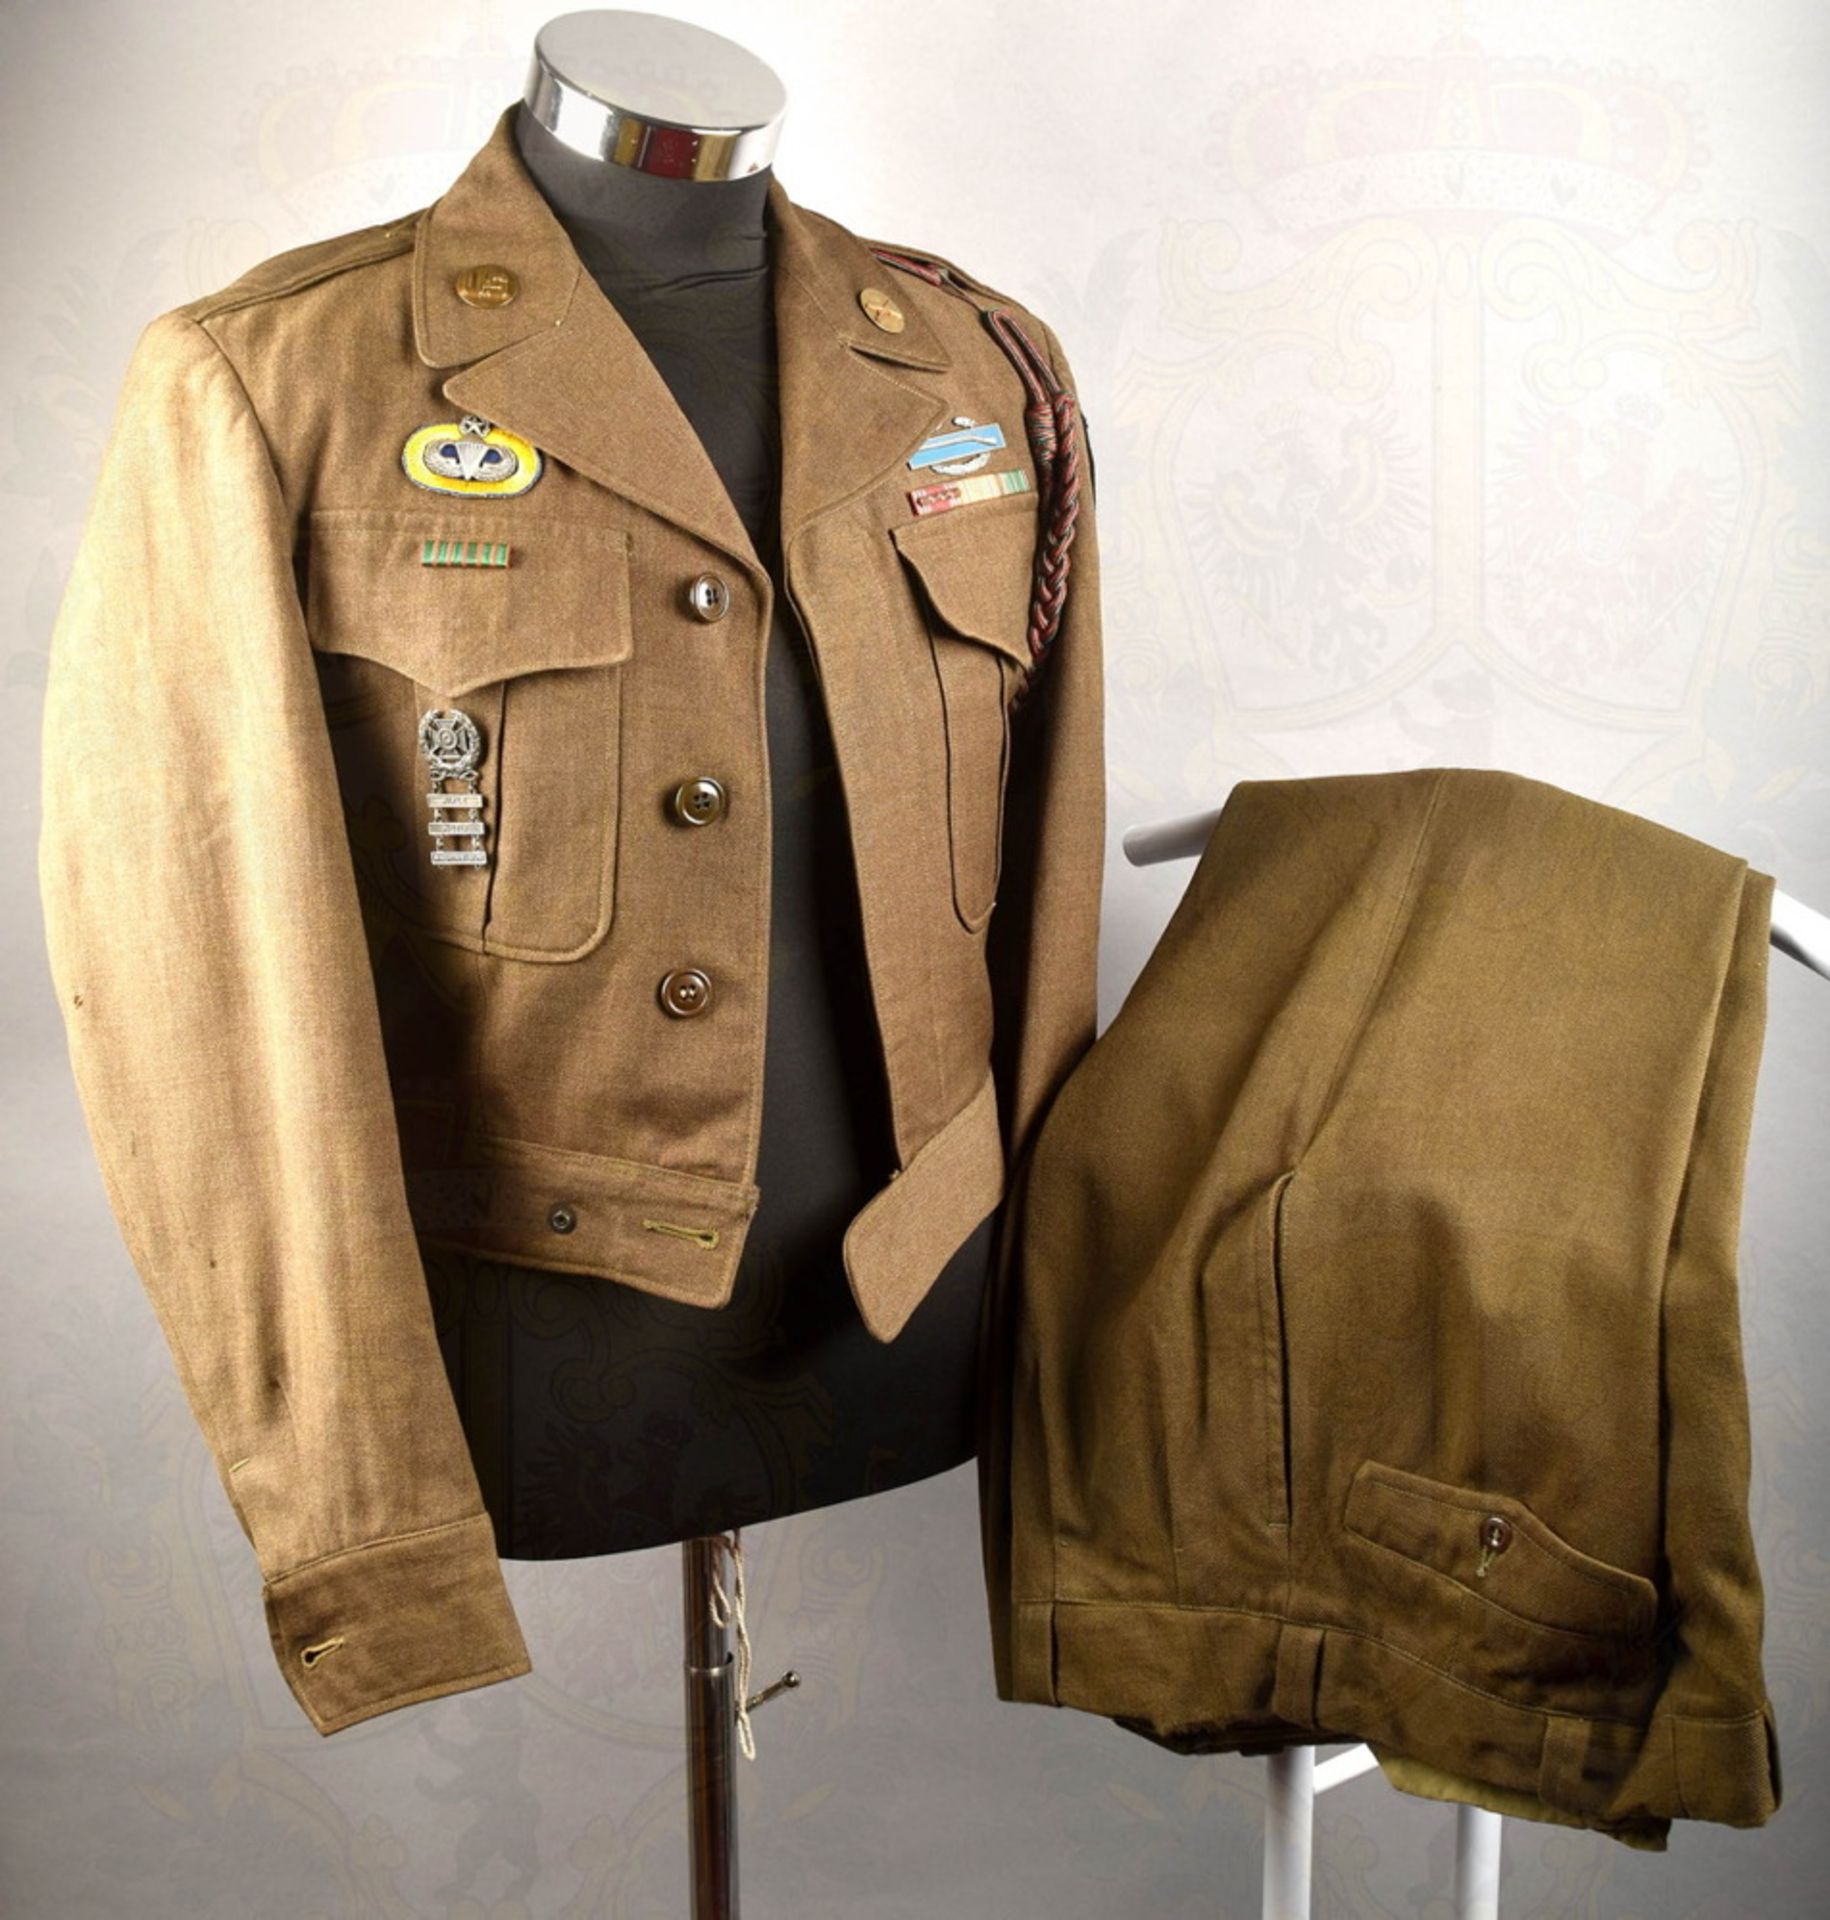 Uniform of the 101st Airborne Division